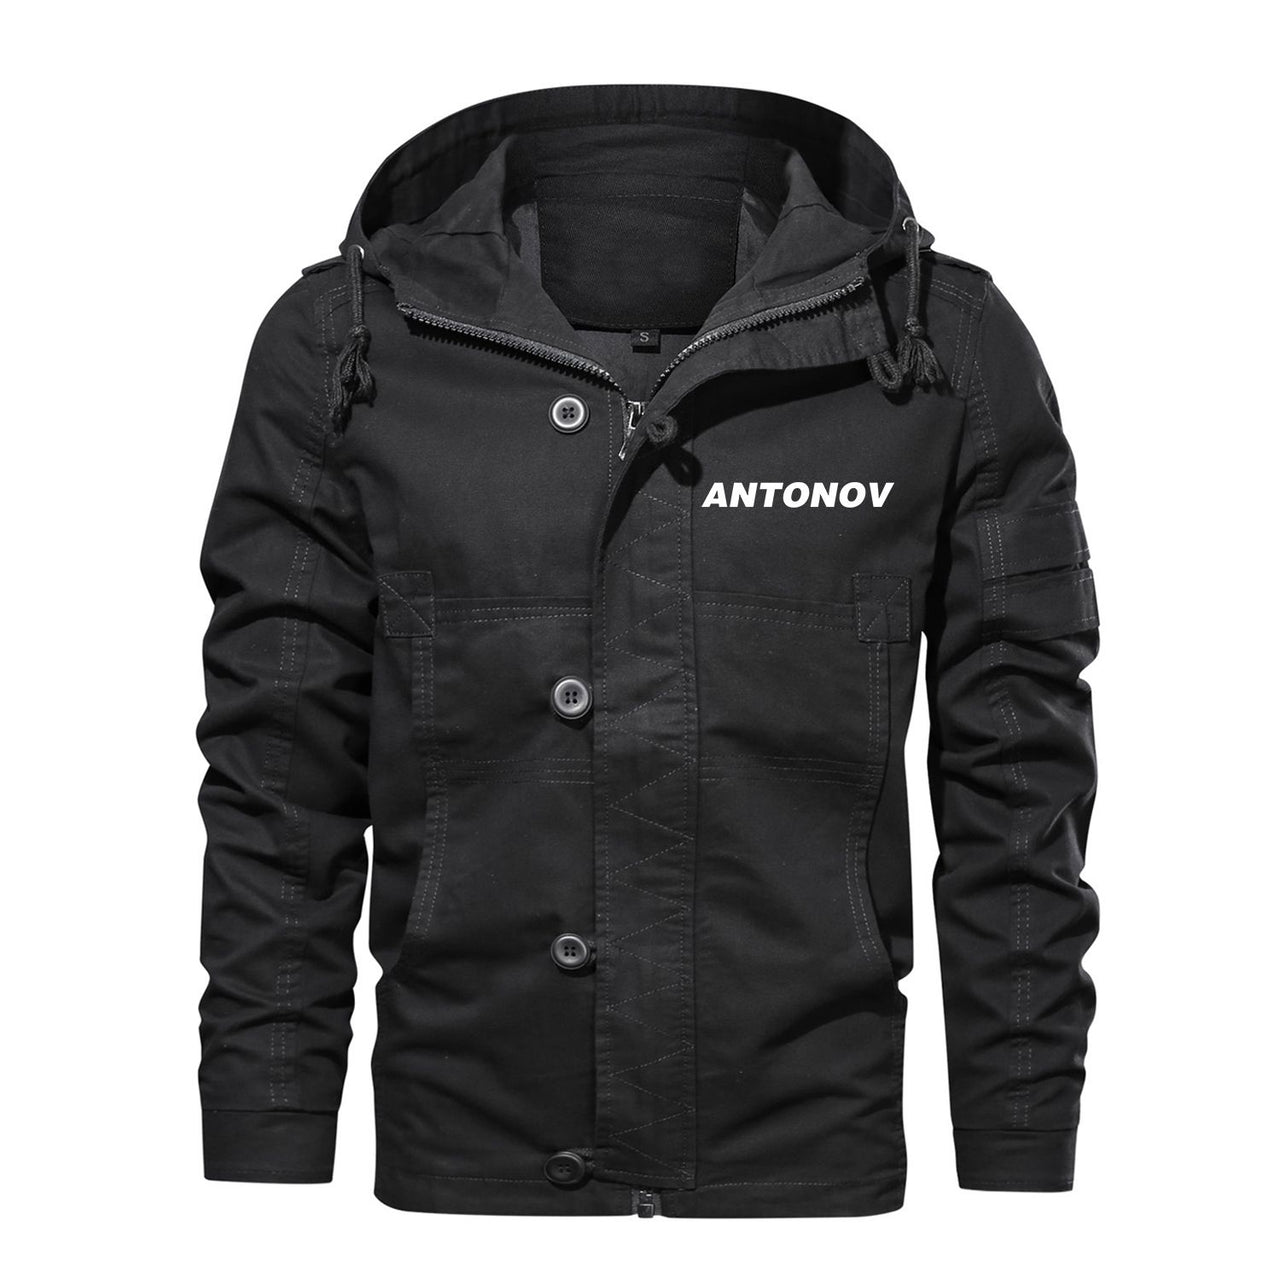 Antonov & Text Designed Cotton Jackets